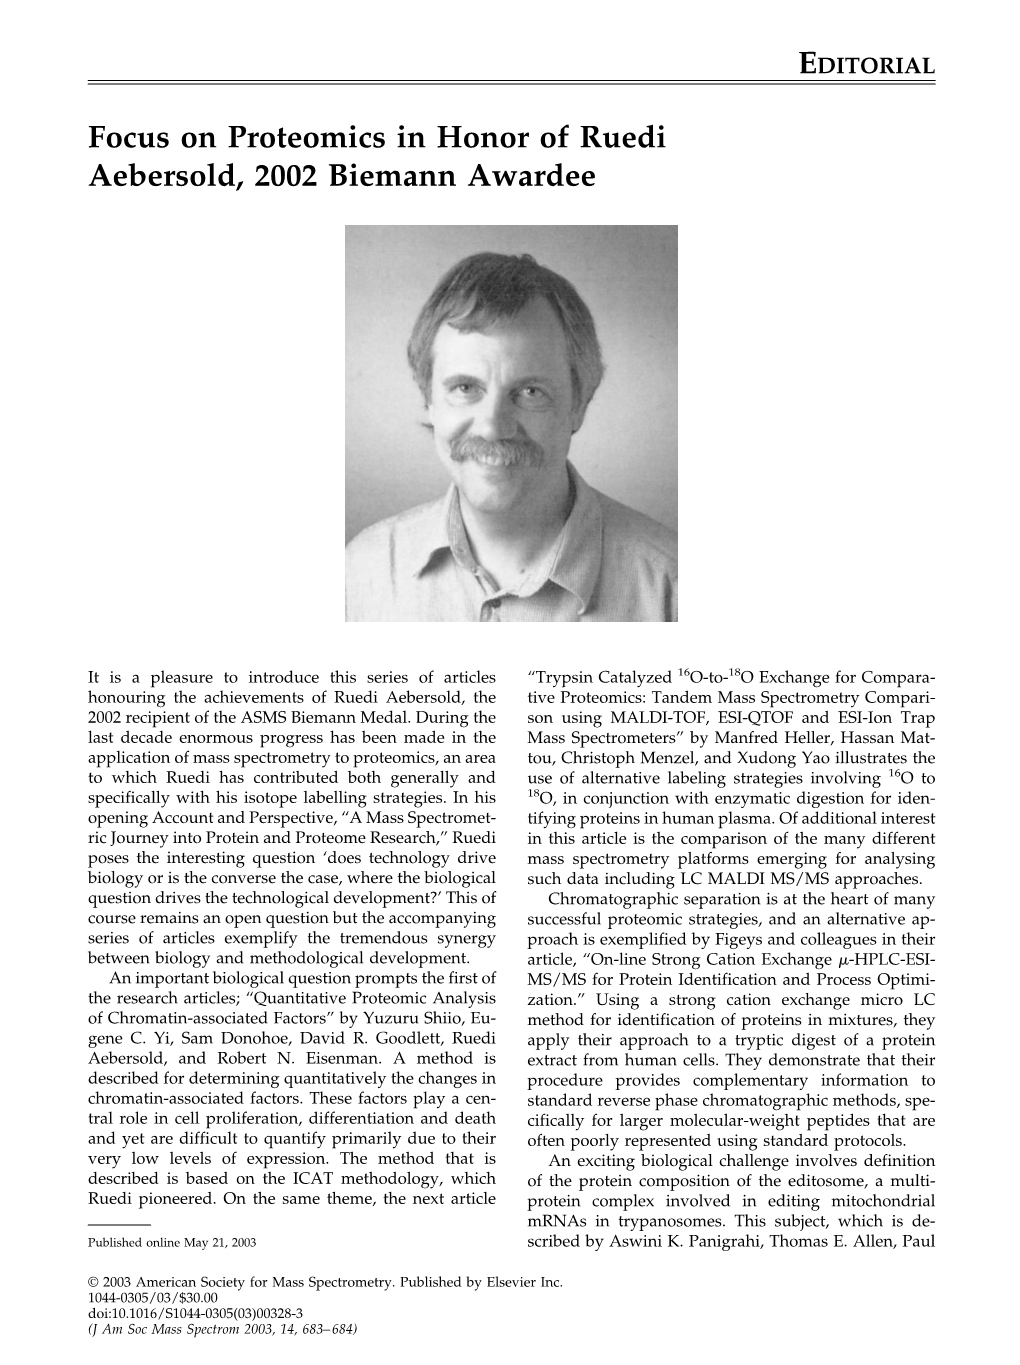 Focus on Proteomics in Honor of Ruedi Aebersold, 2002 Biemann Awardee